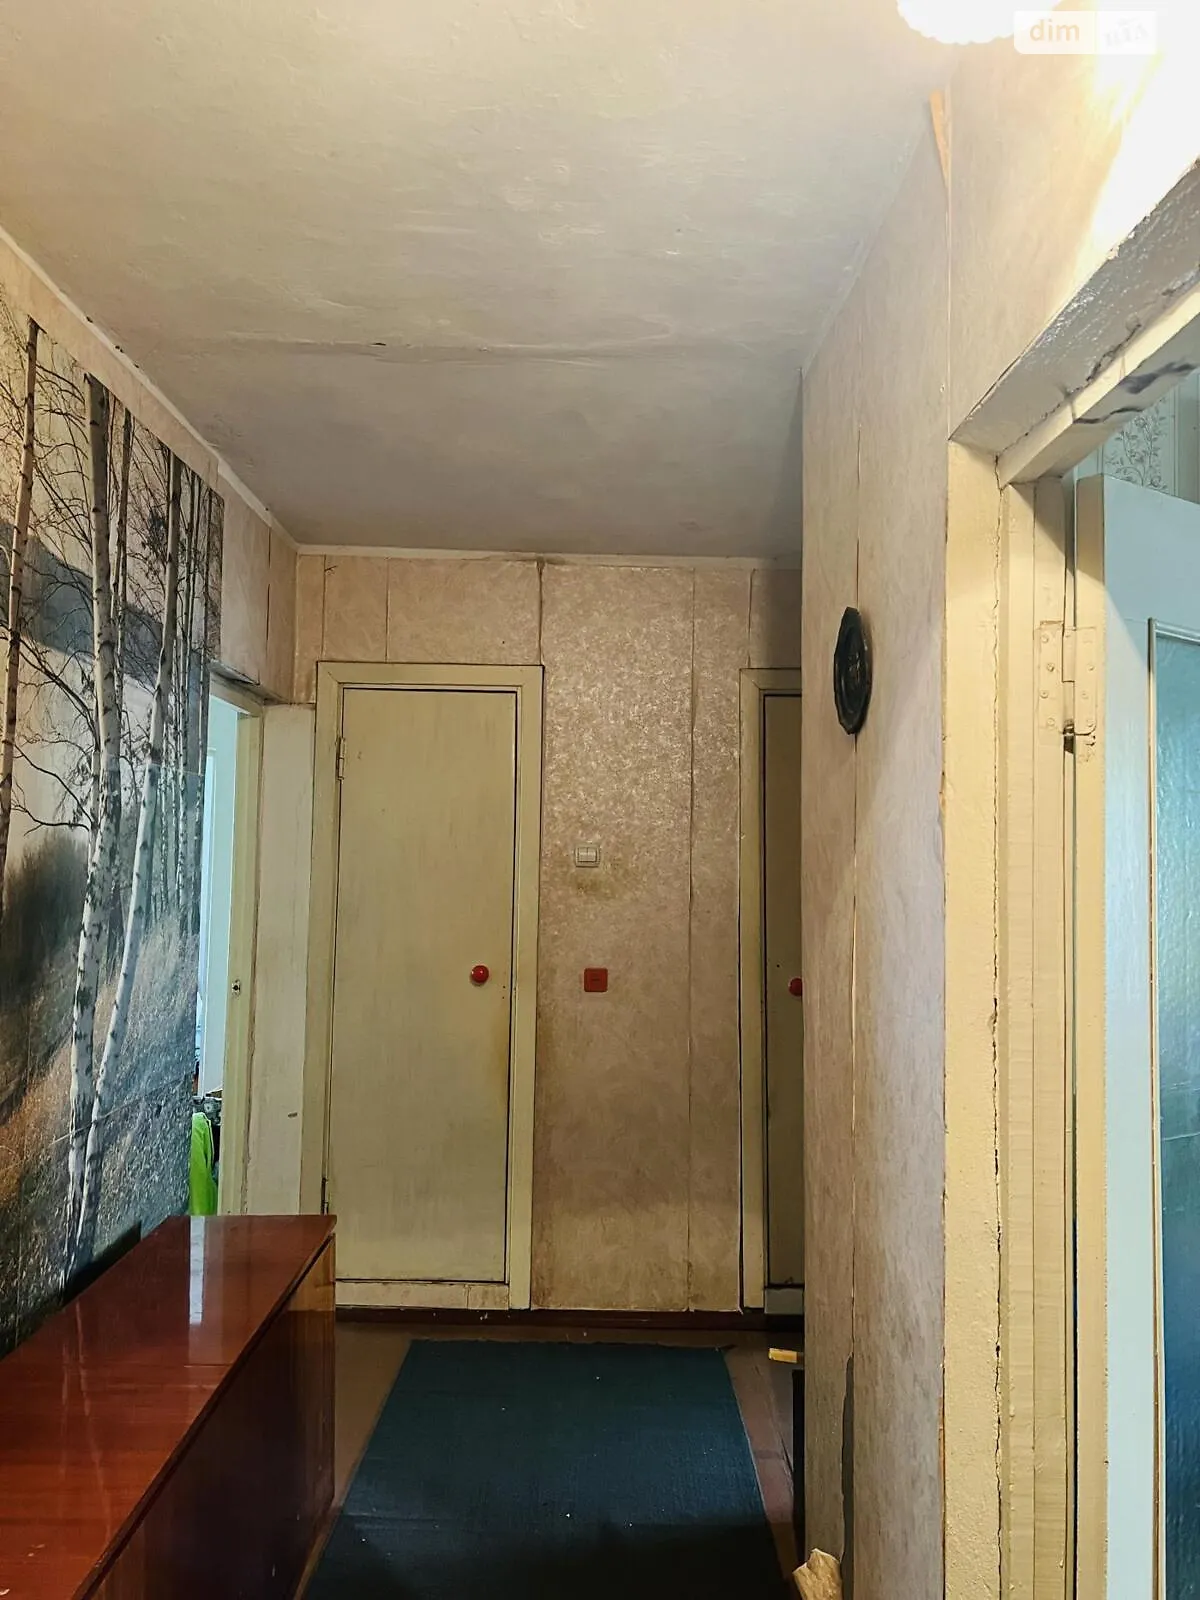 Сдается в аренду 3-комнатная квартира 70 кв. м в Ровно - фото 2